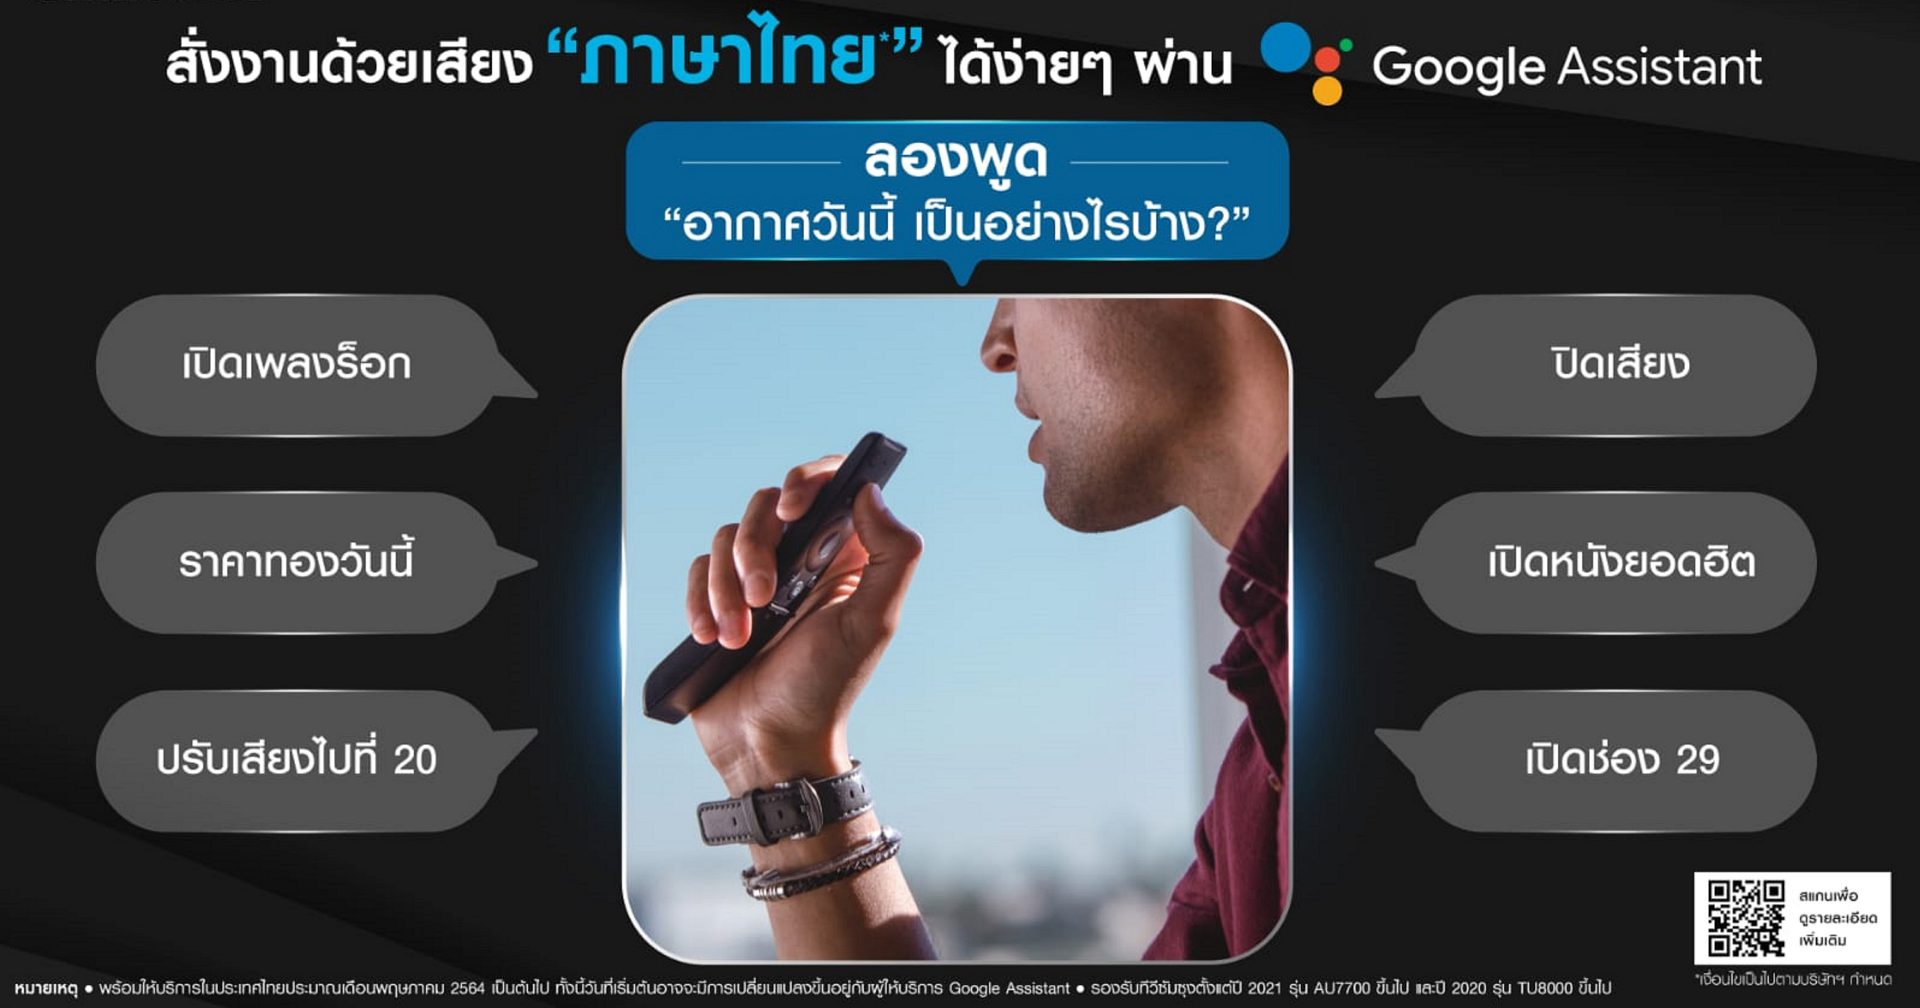 [How-to] วิธีทำให้ทีวีซัมซุงสั่งงานด้วย Google Assistant ภาษาไทยได้